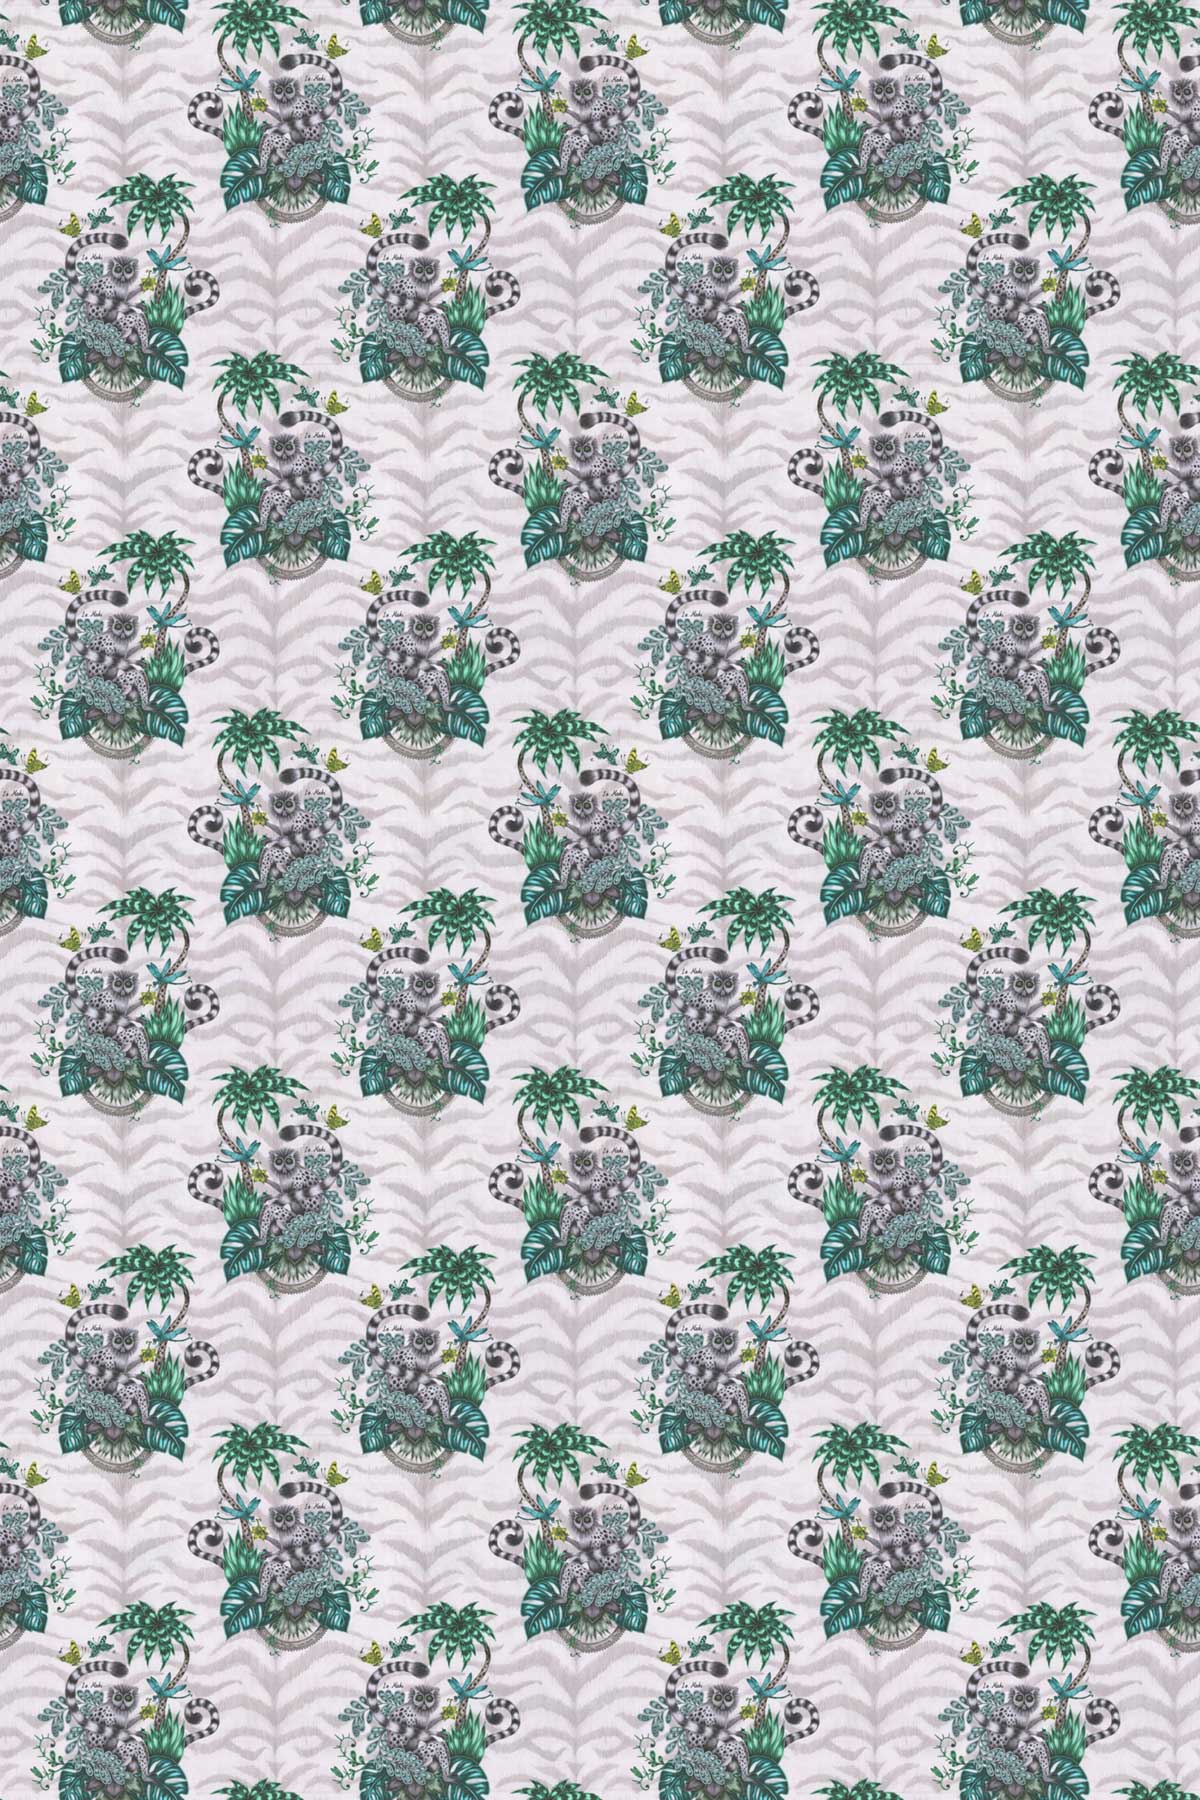 Lemur Fabric - Green - by Emma J Shipley